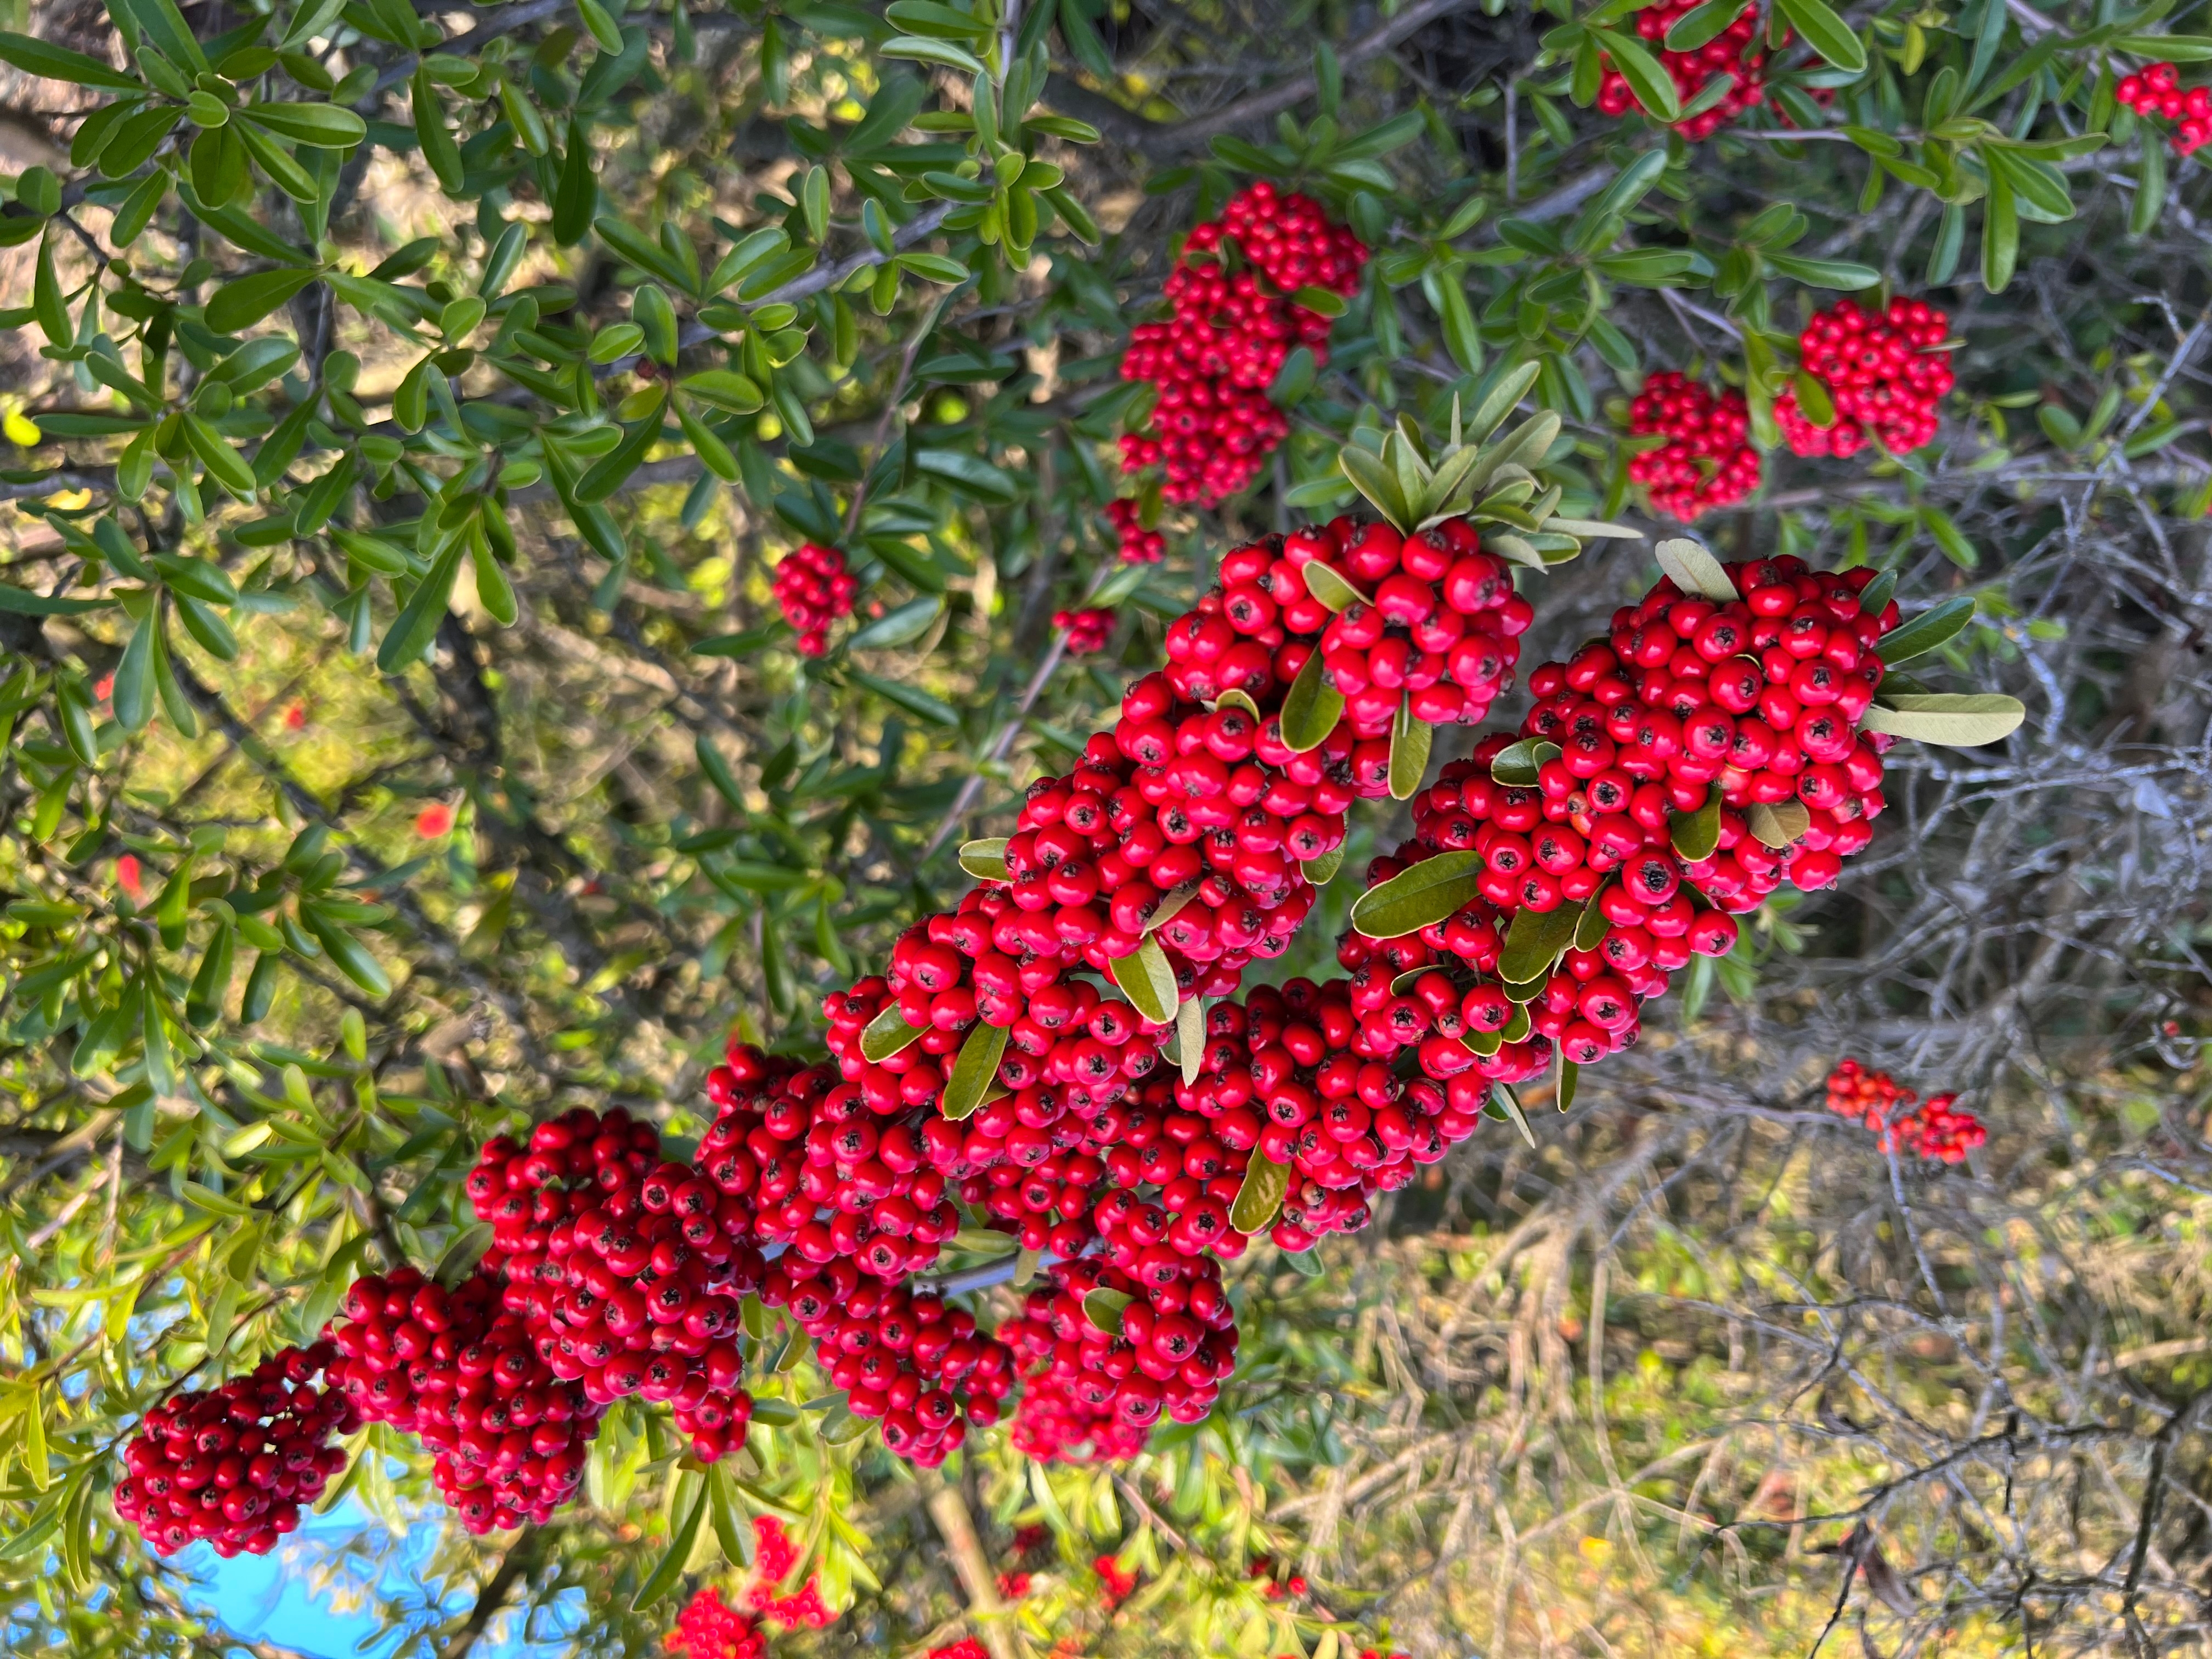 winter berries all around - under the solano sun - anr blogs